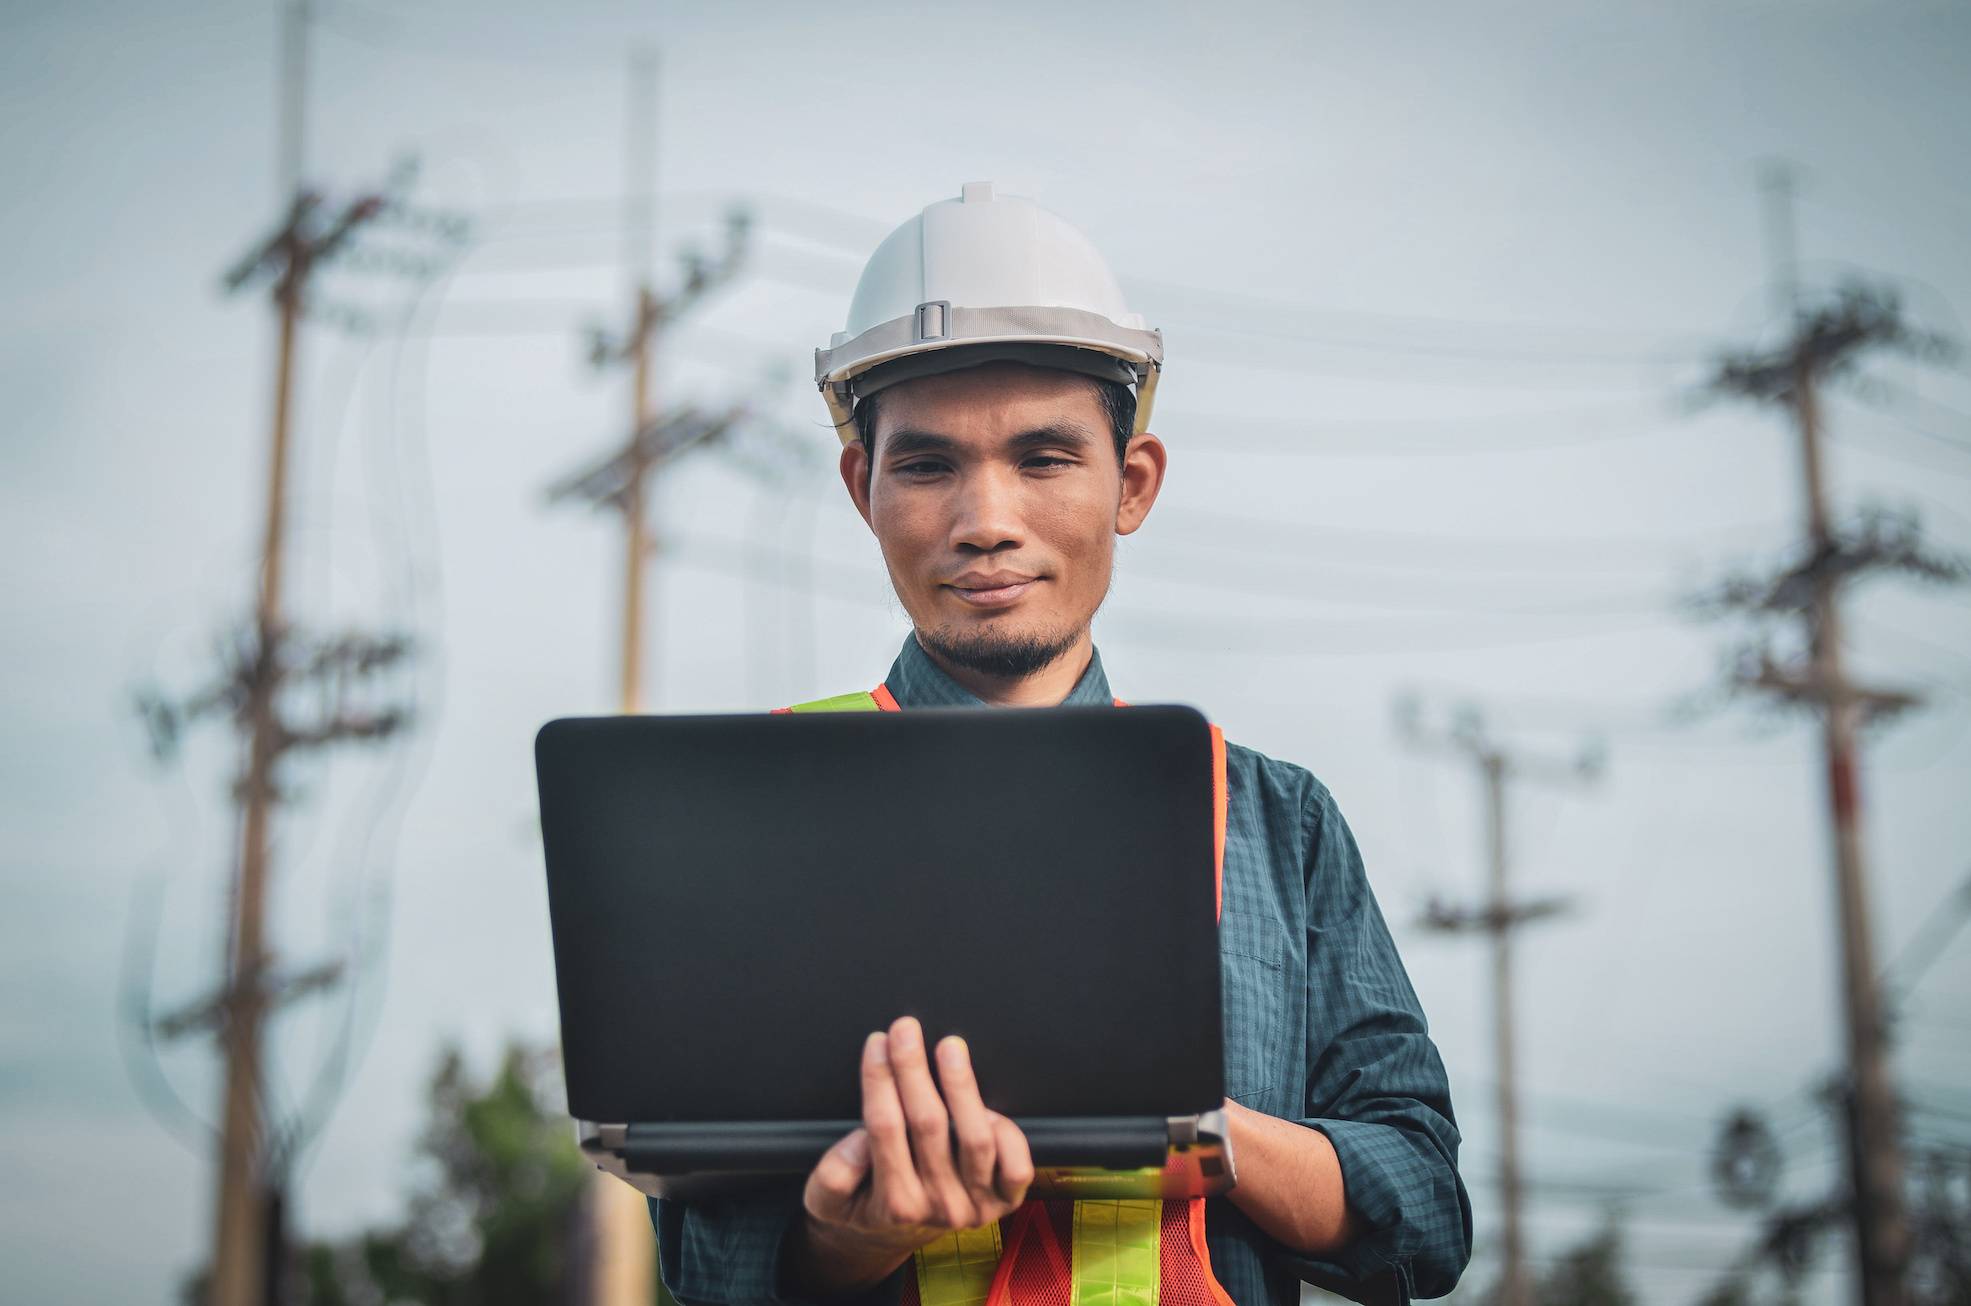 Construction Supervisor holding a laptop